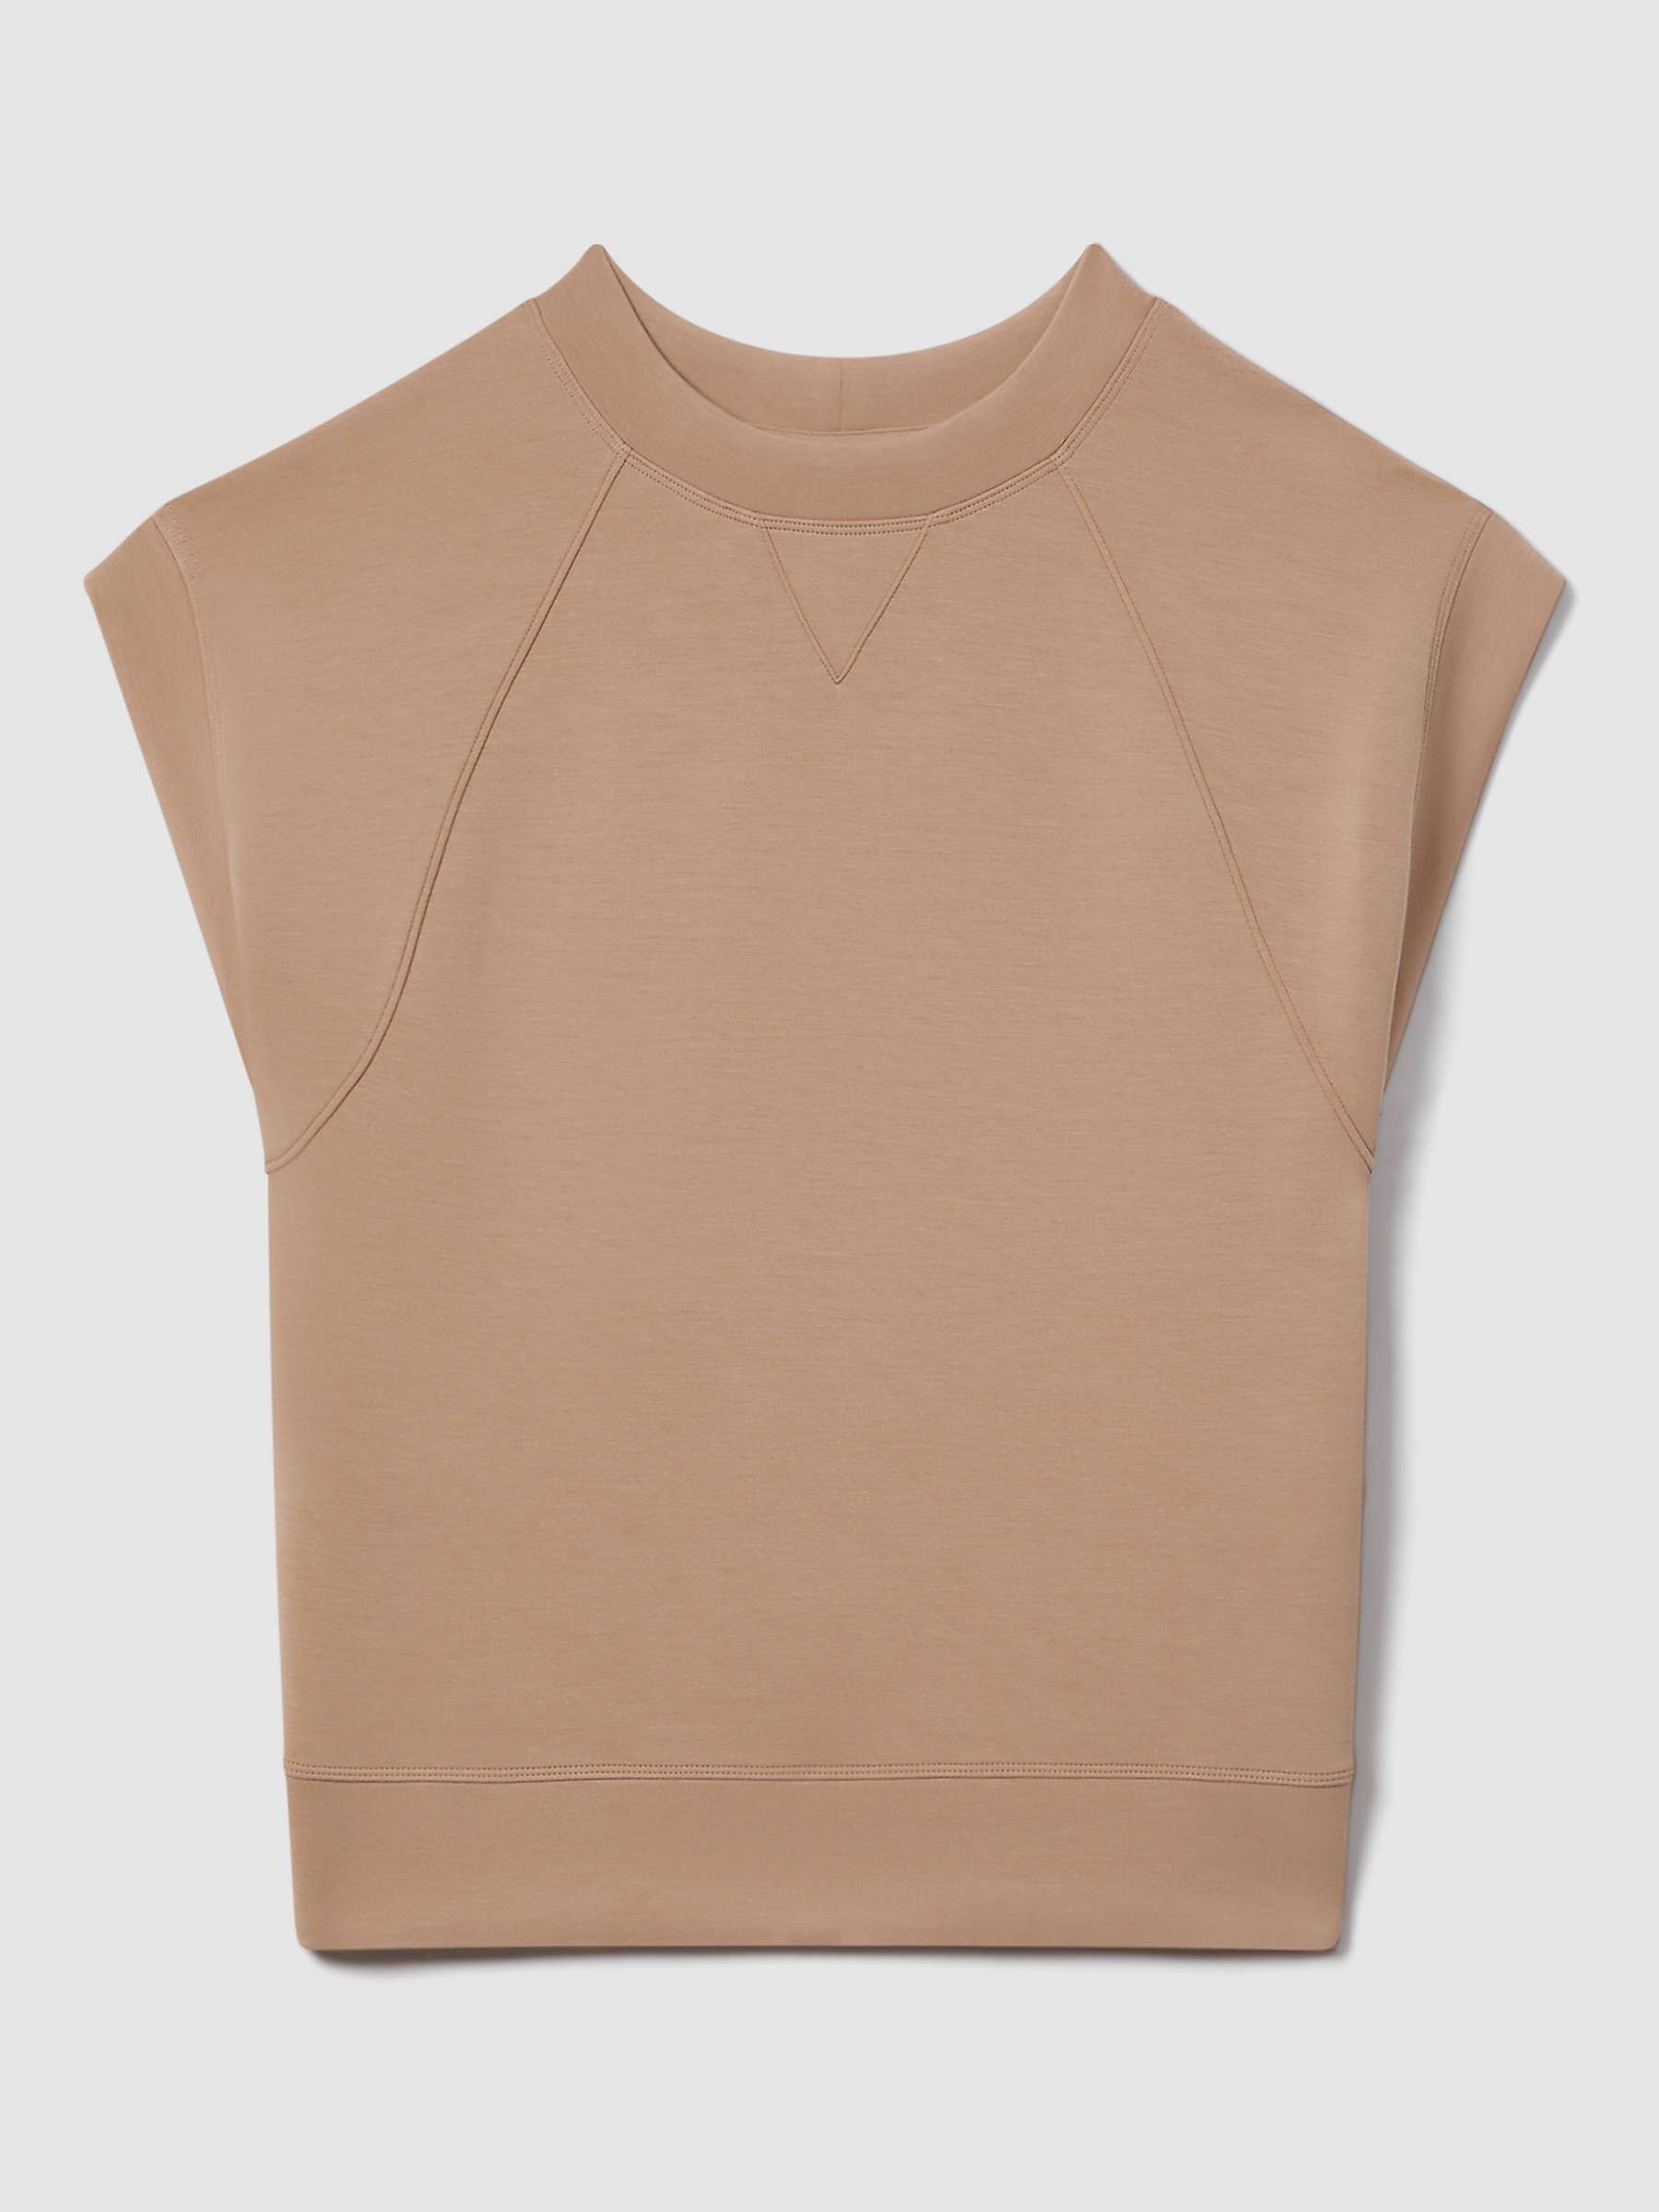 Buy Reiss Joanna Cap Sleeve Sweatshirt Top Online at johnlewis.com